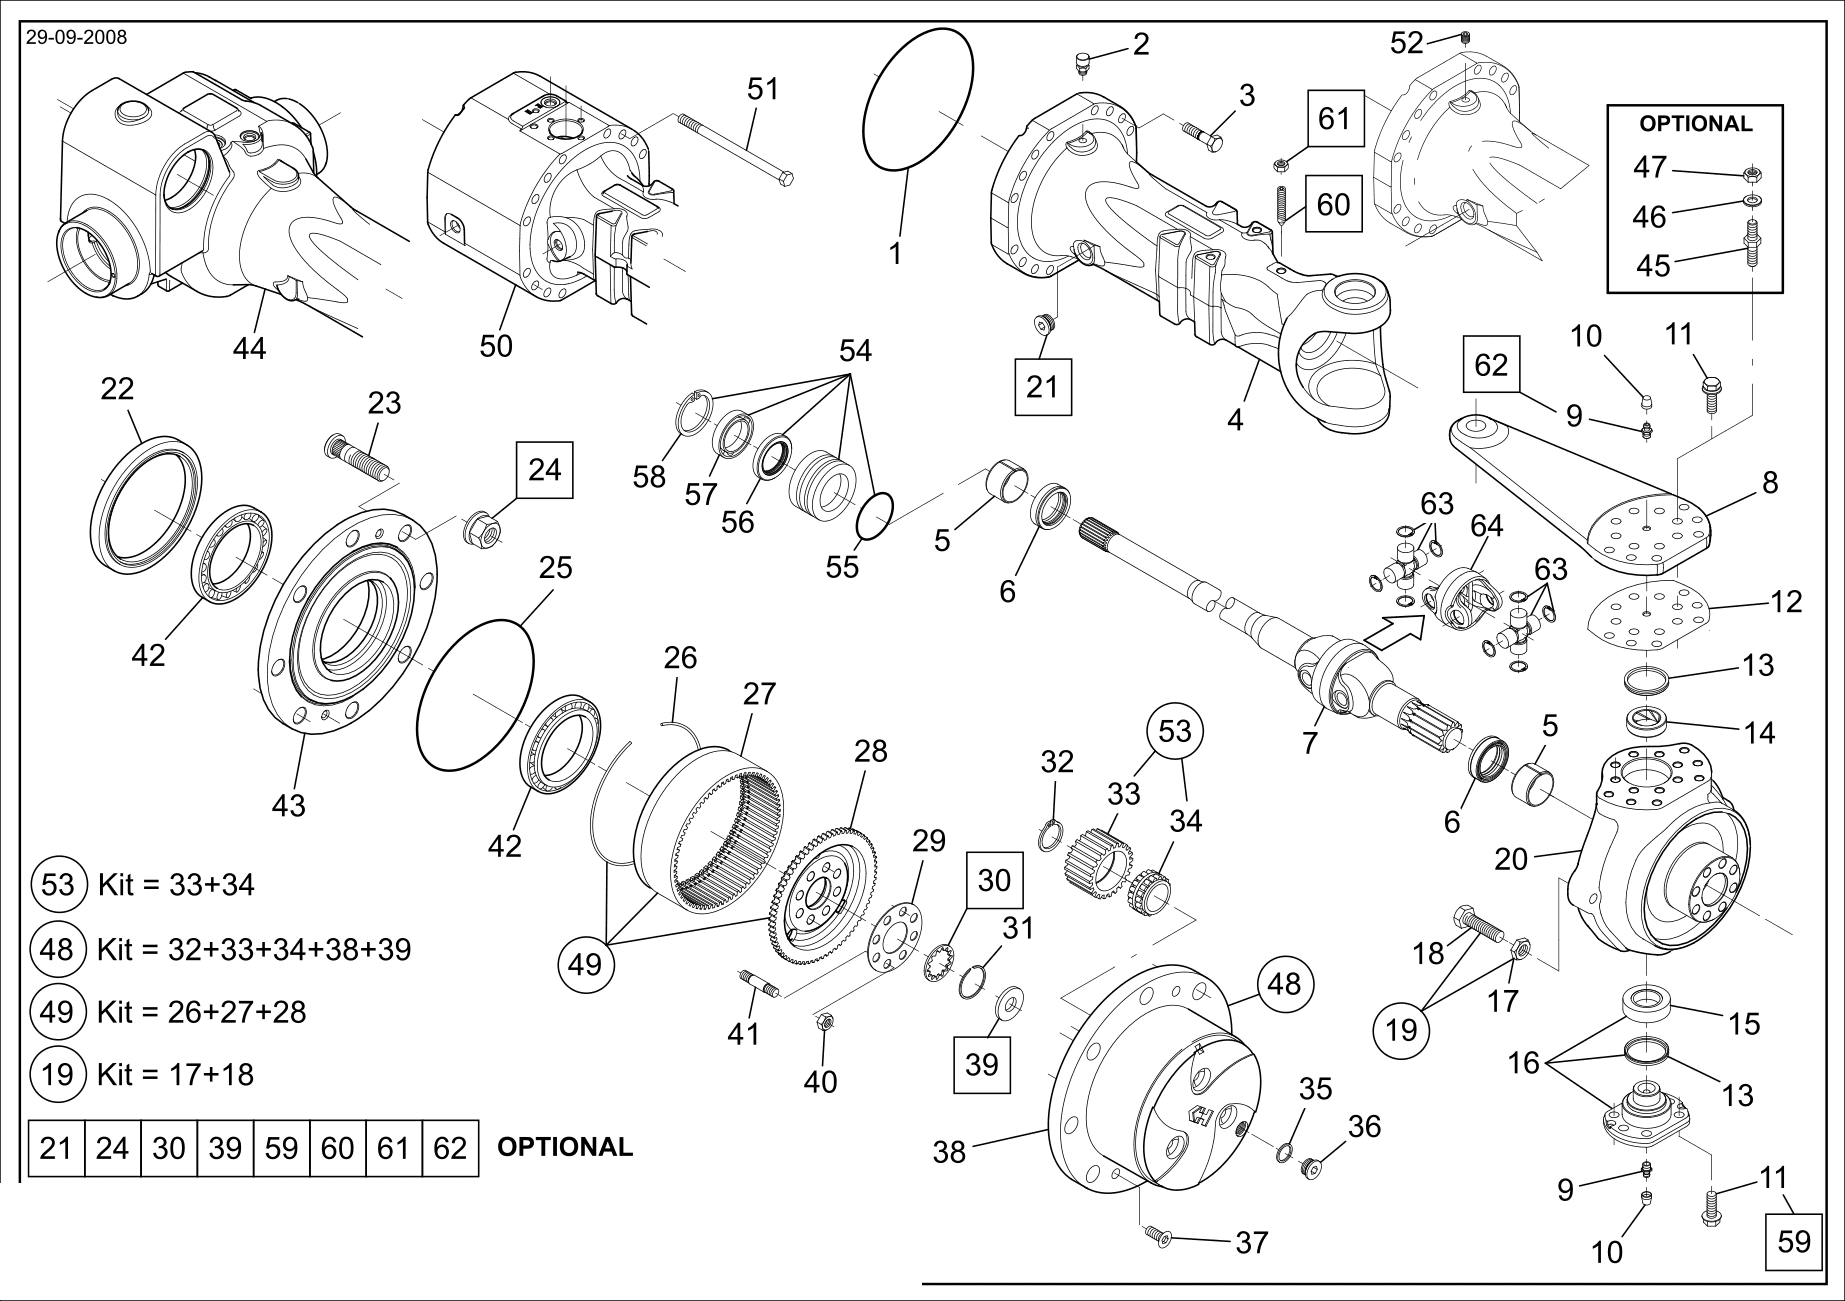 drawing for SCHOPF MASCHINENBAU GMBH 101161 - ARTICULATION (figure 1)